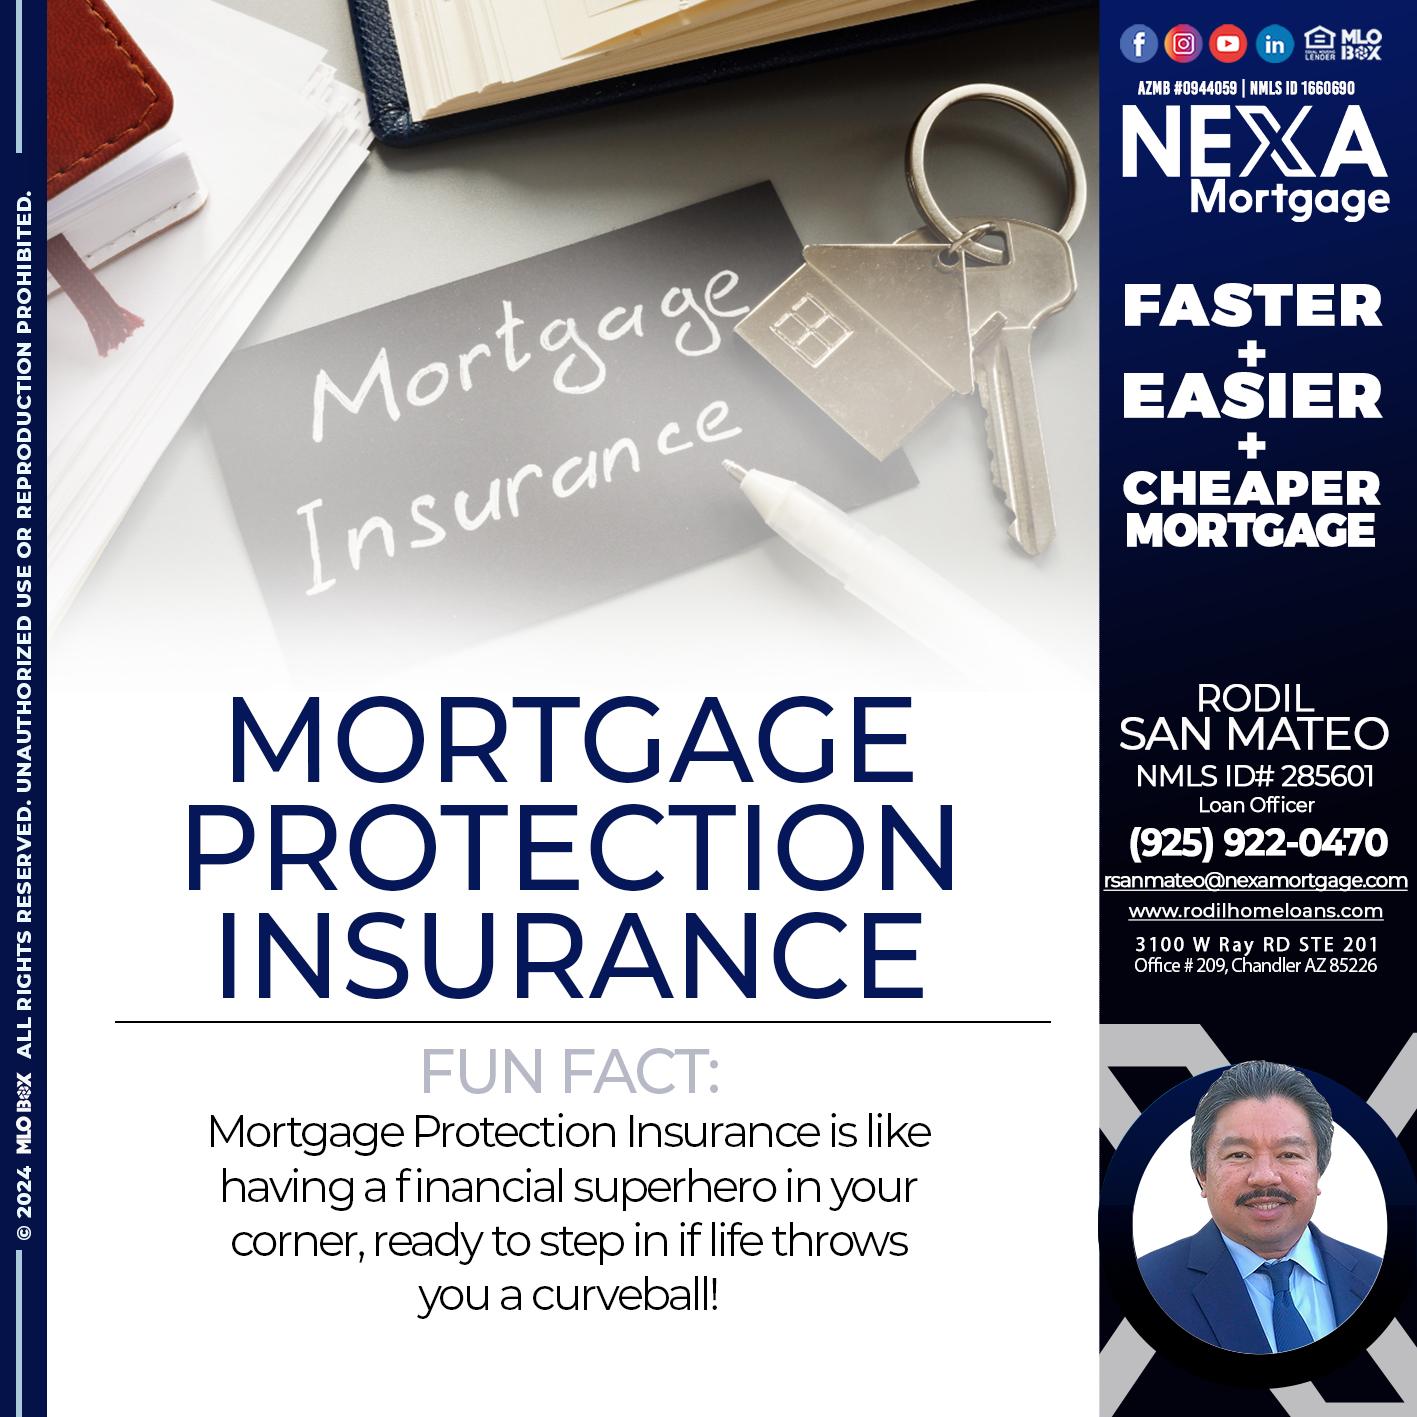 mortgage protection - Rodil San Mateo -Loan Officer